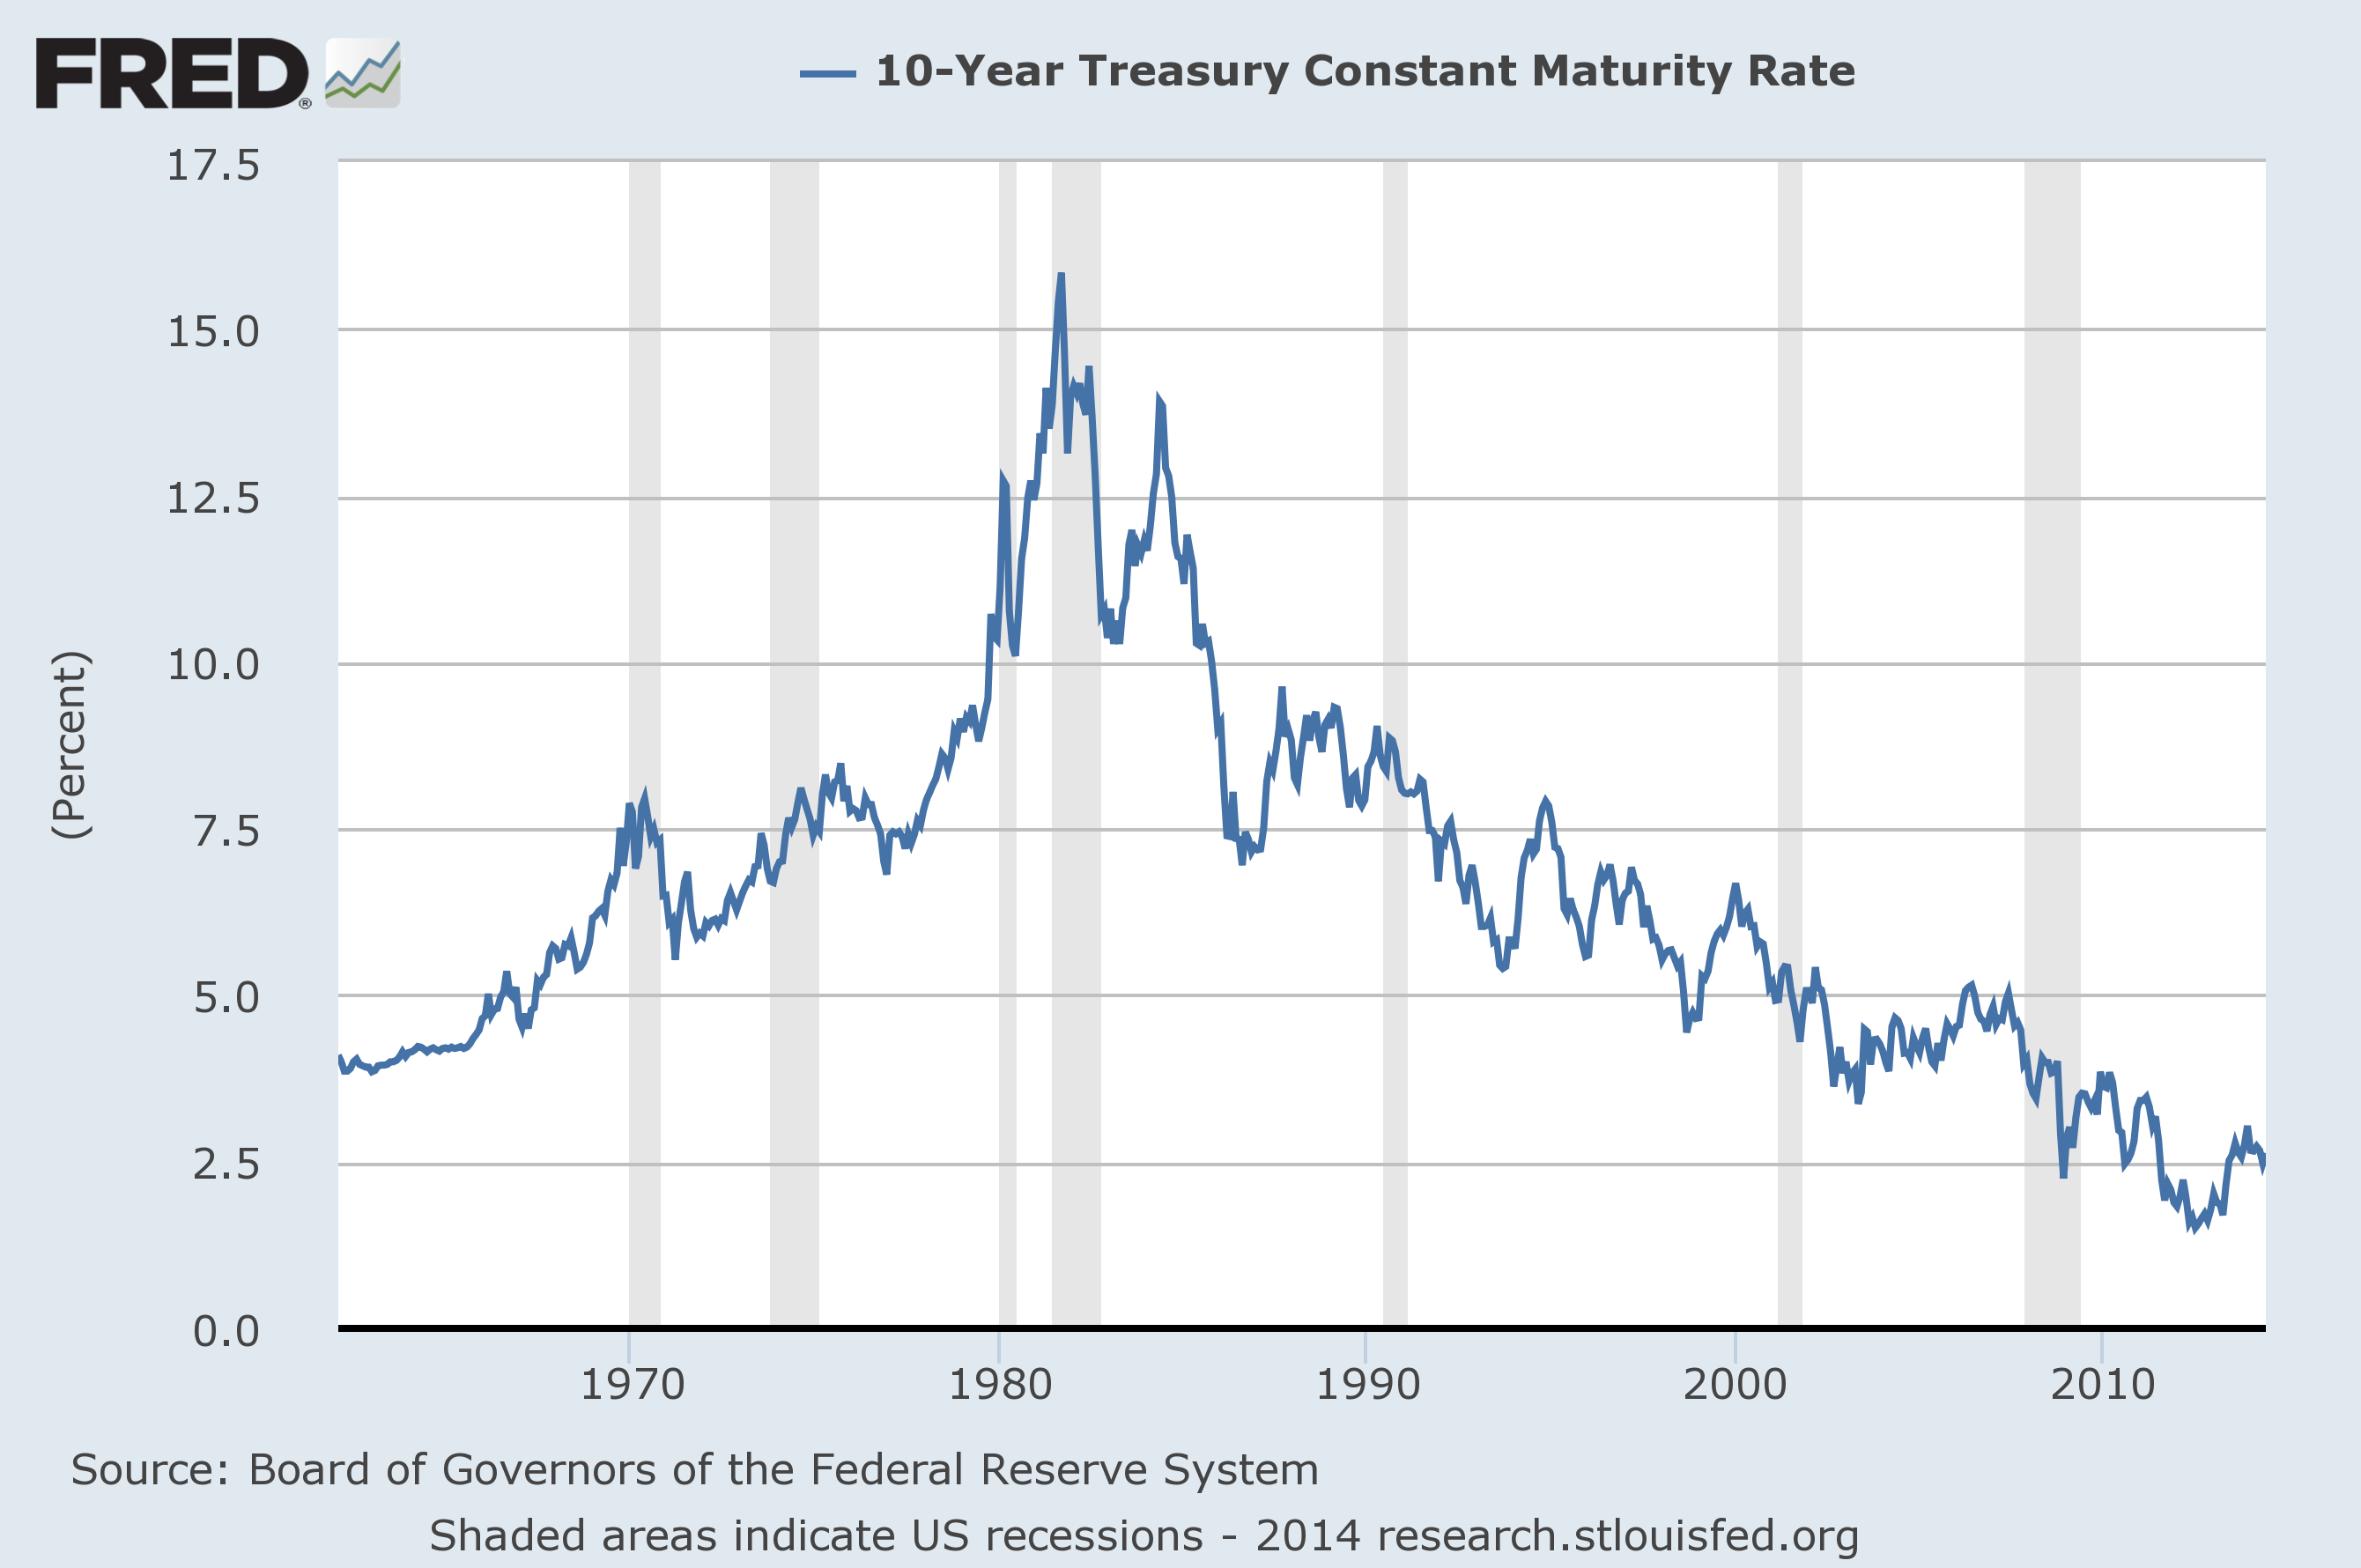 Us 10 Year Treasury Yield Chart